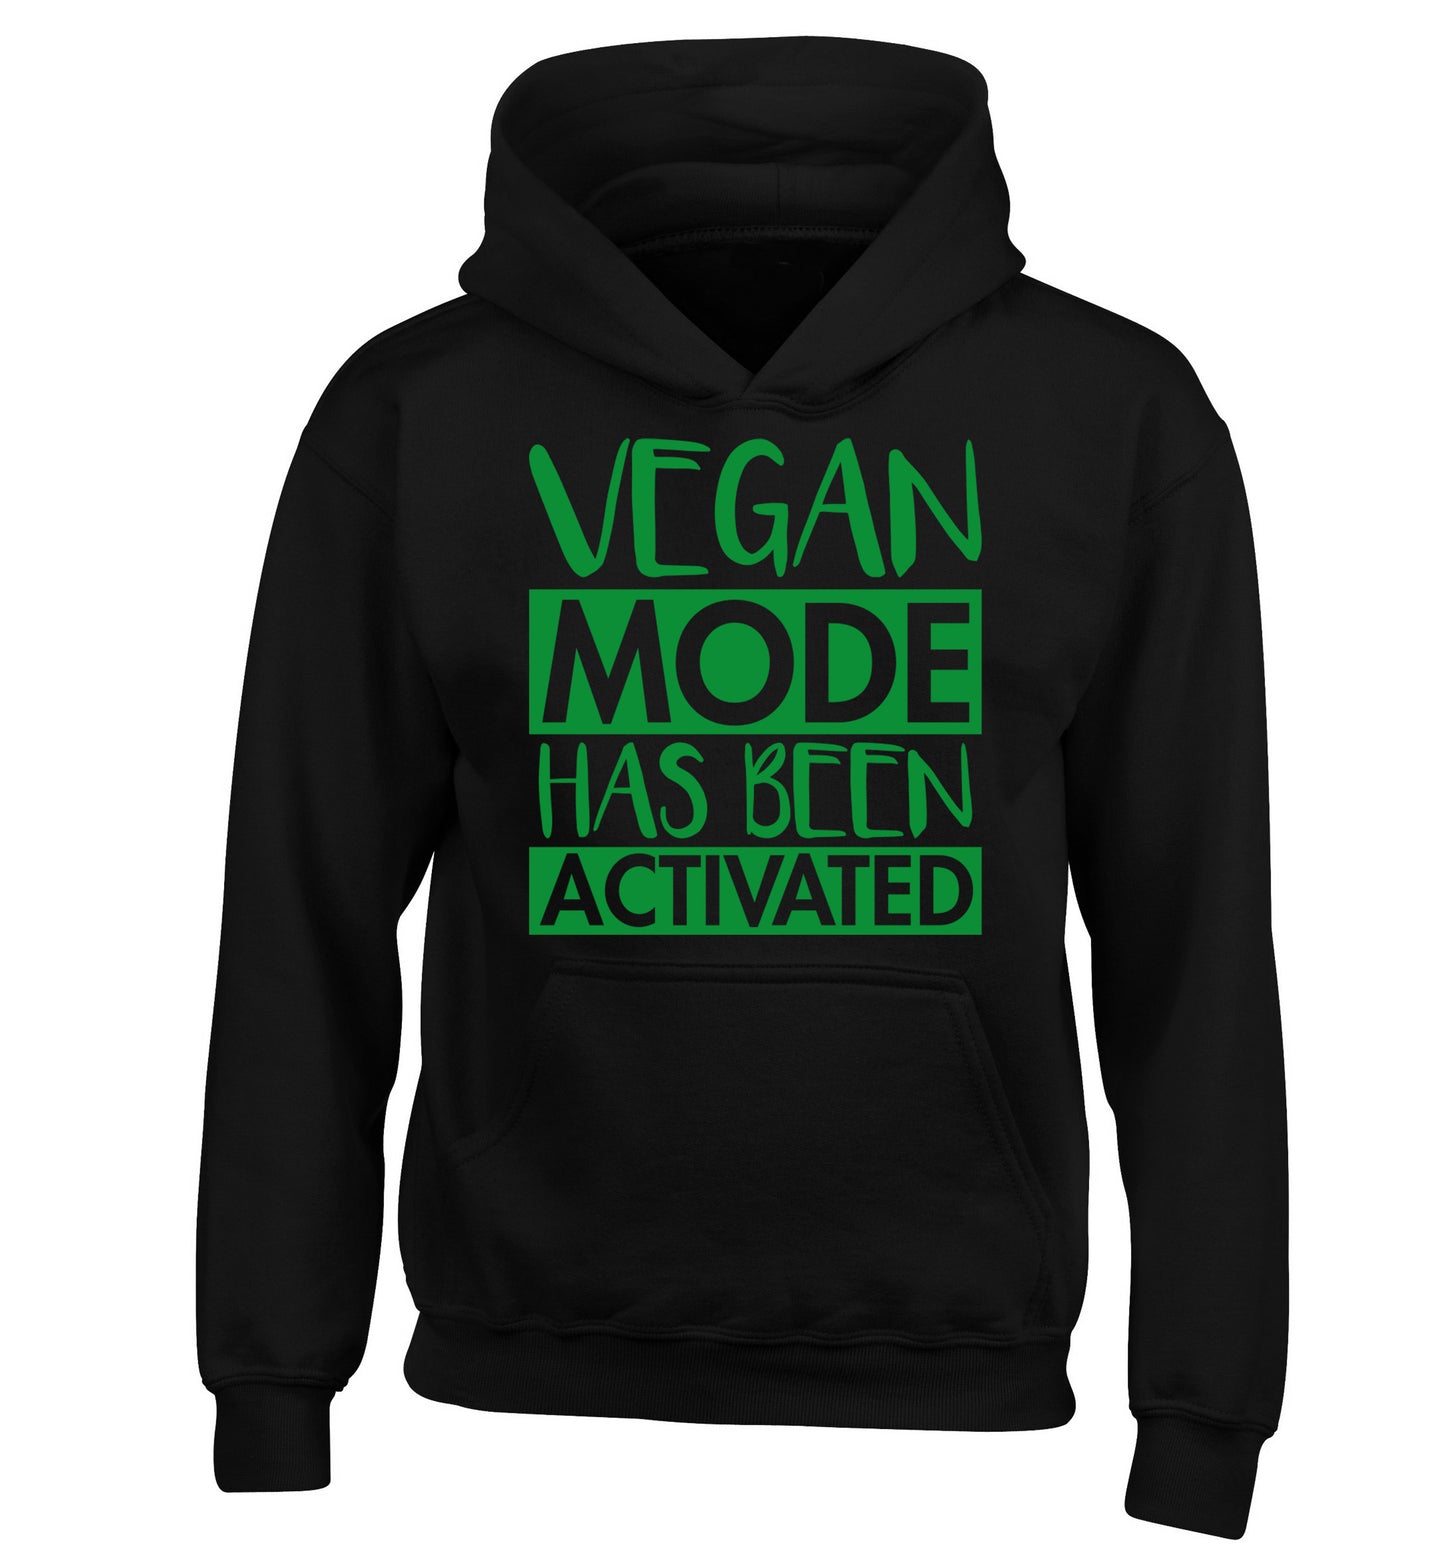 Vegan mode activated children's black hoodie 12-14 Years